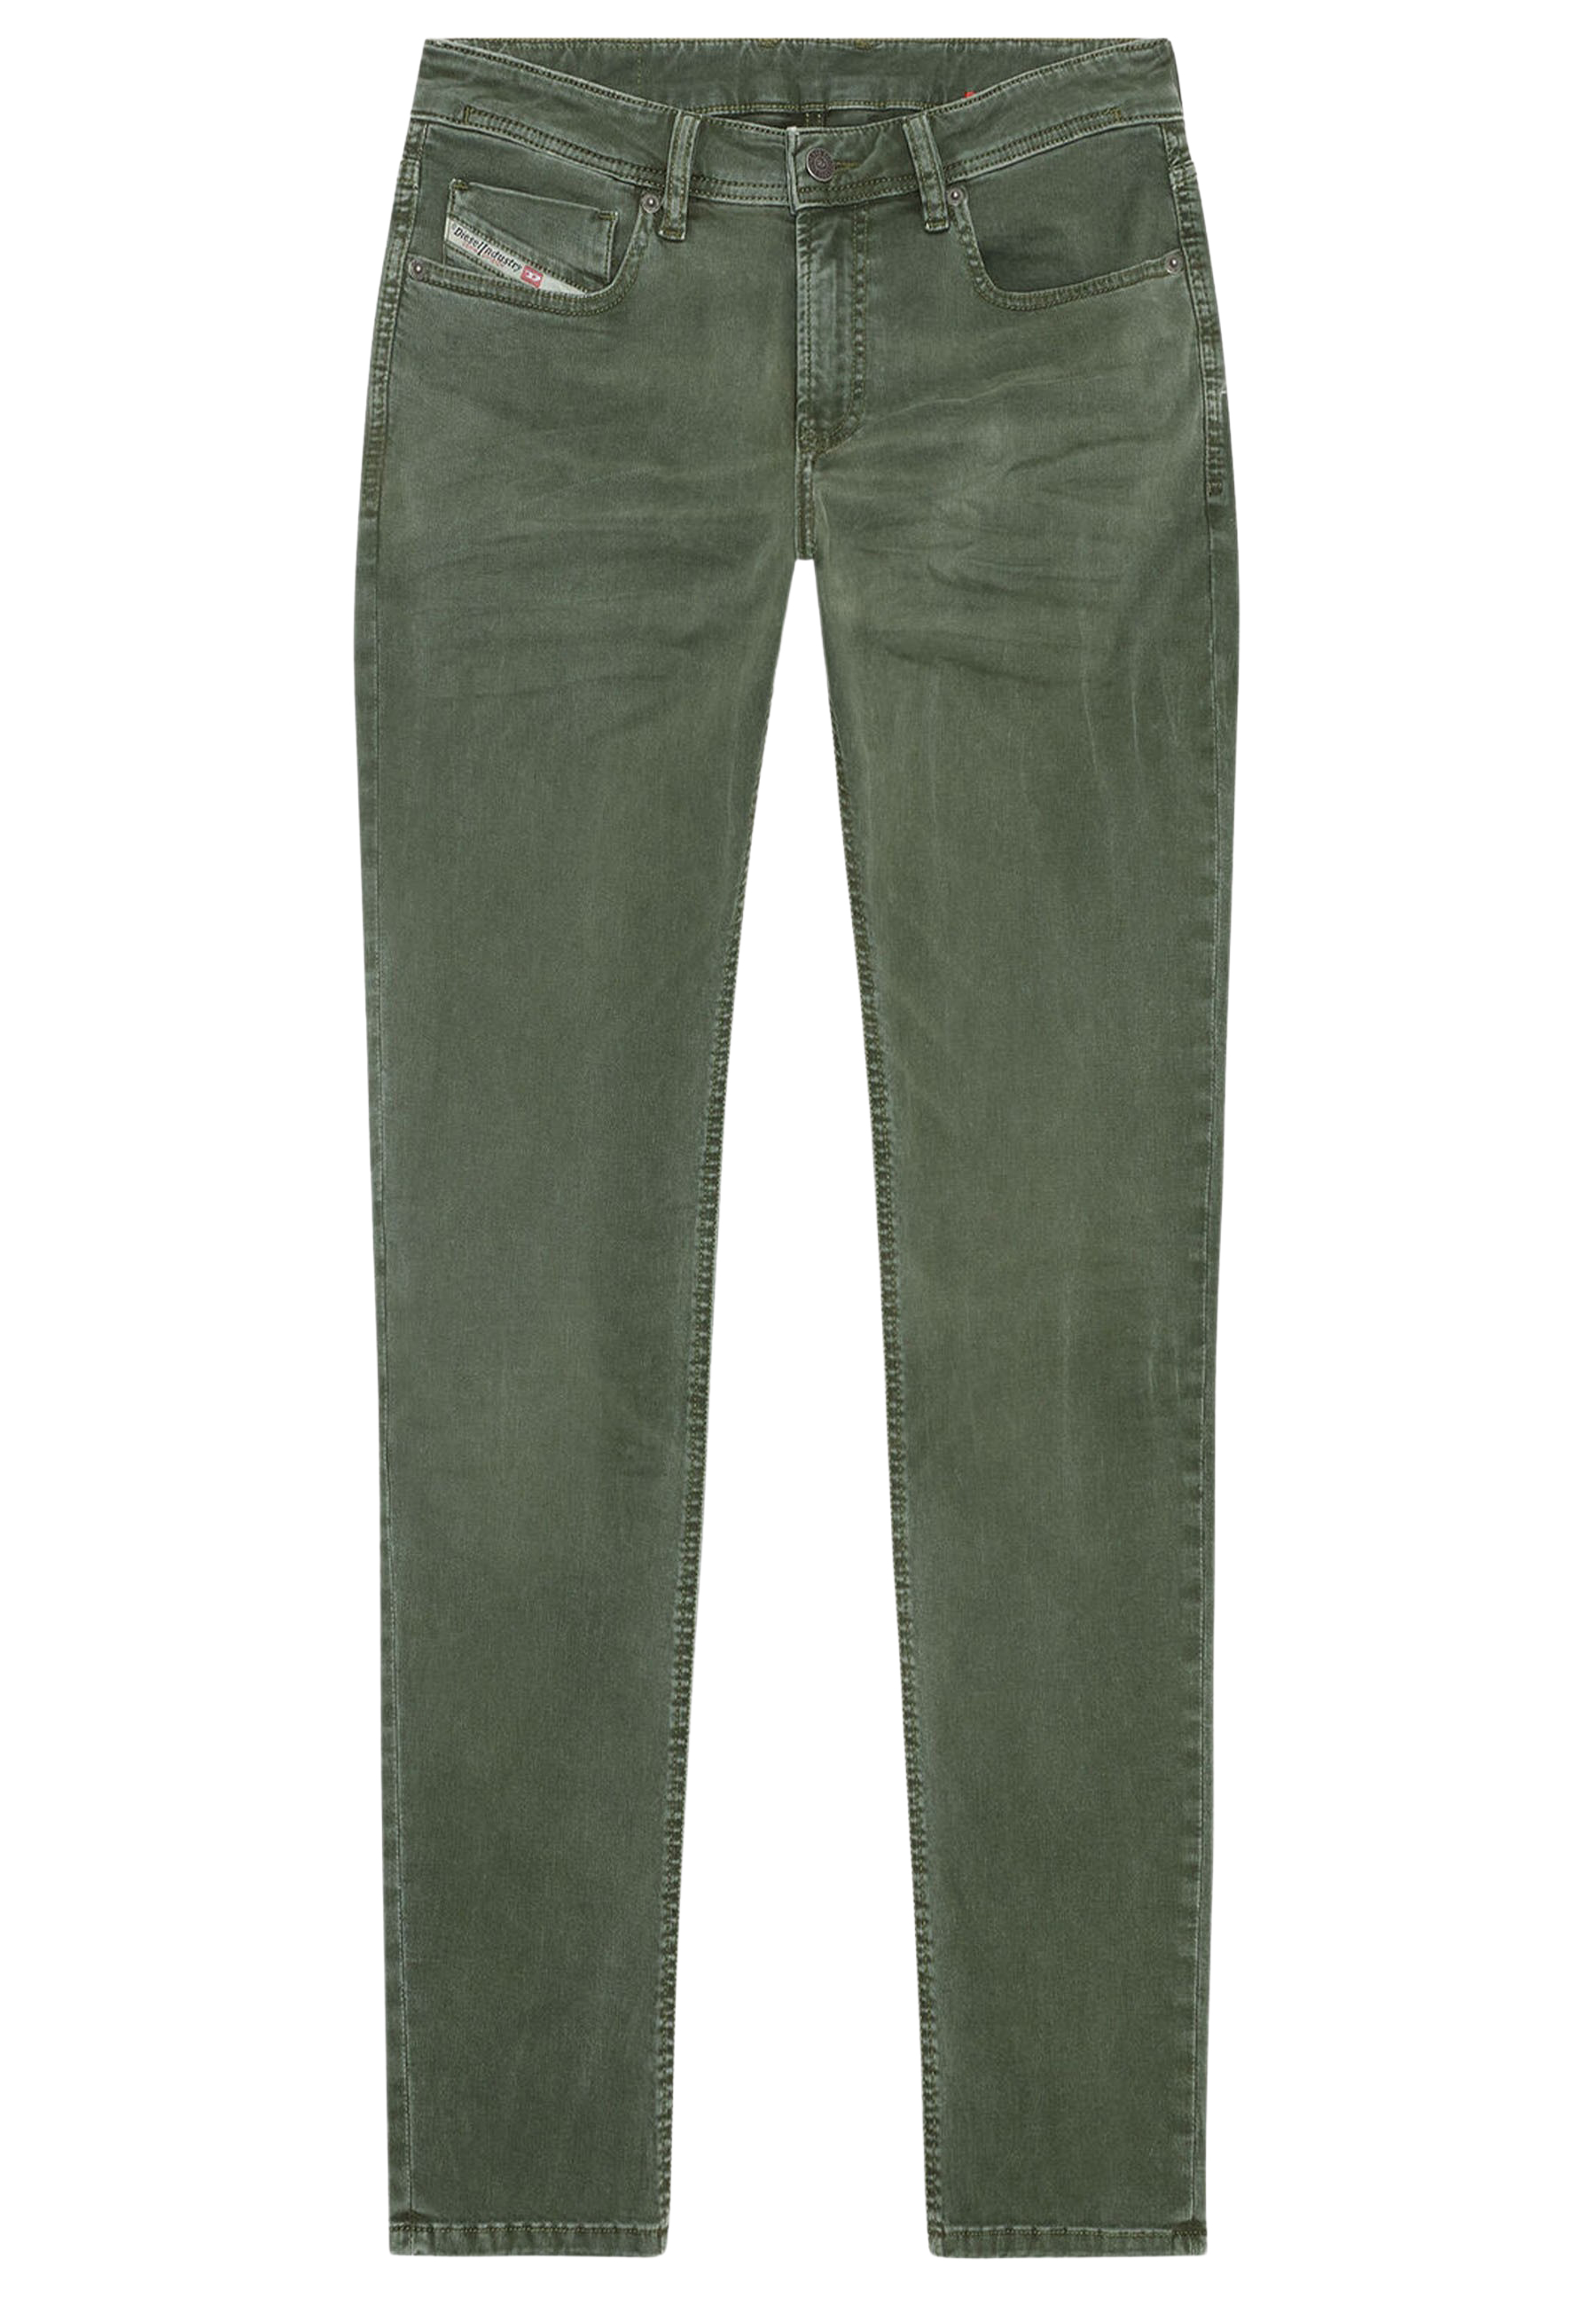 Diesel jeans groen Heren maat 38/32